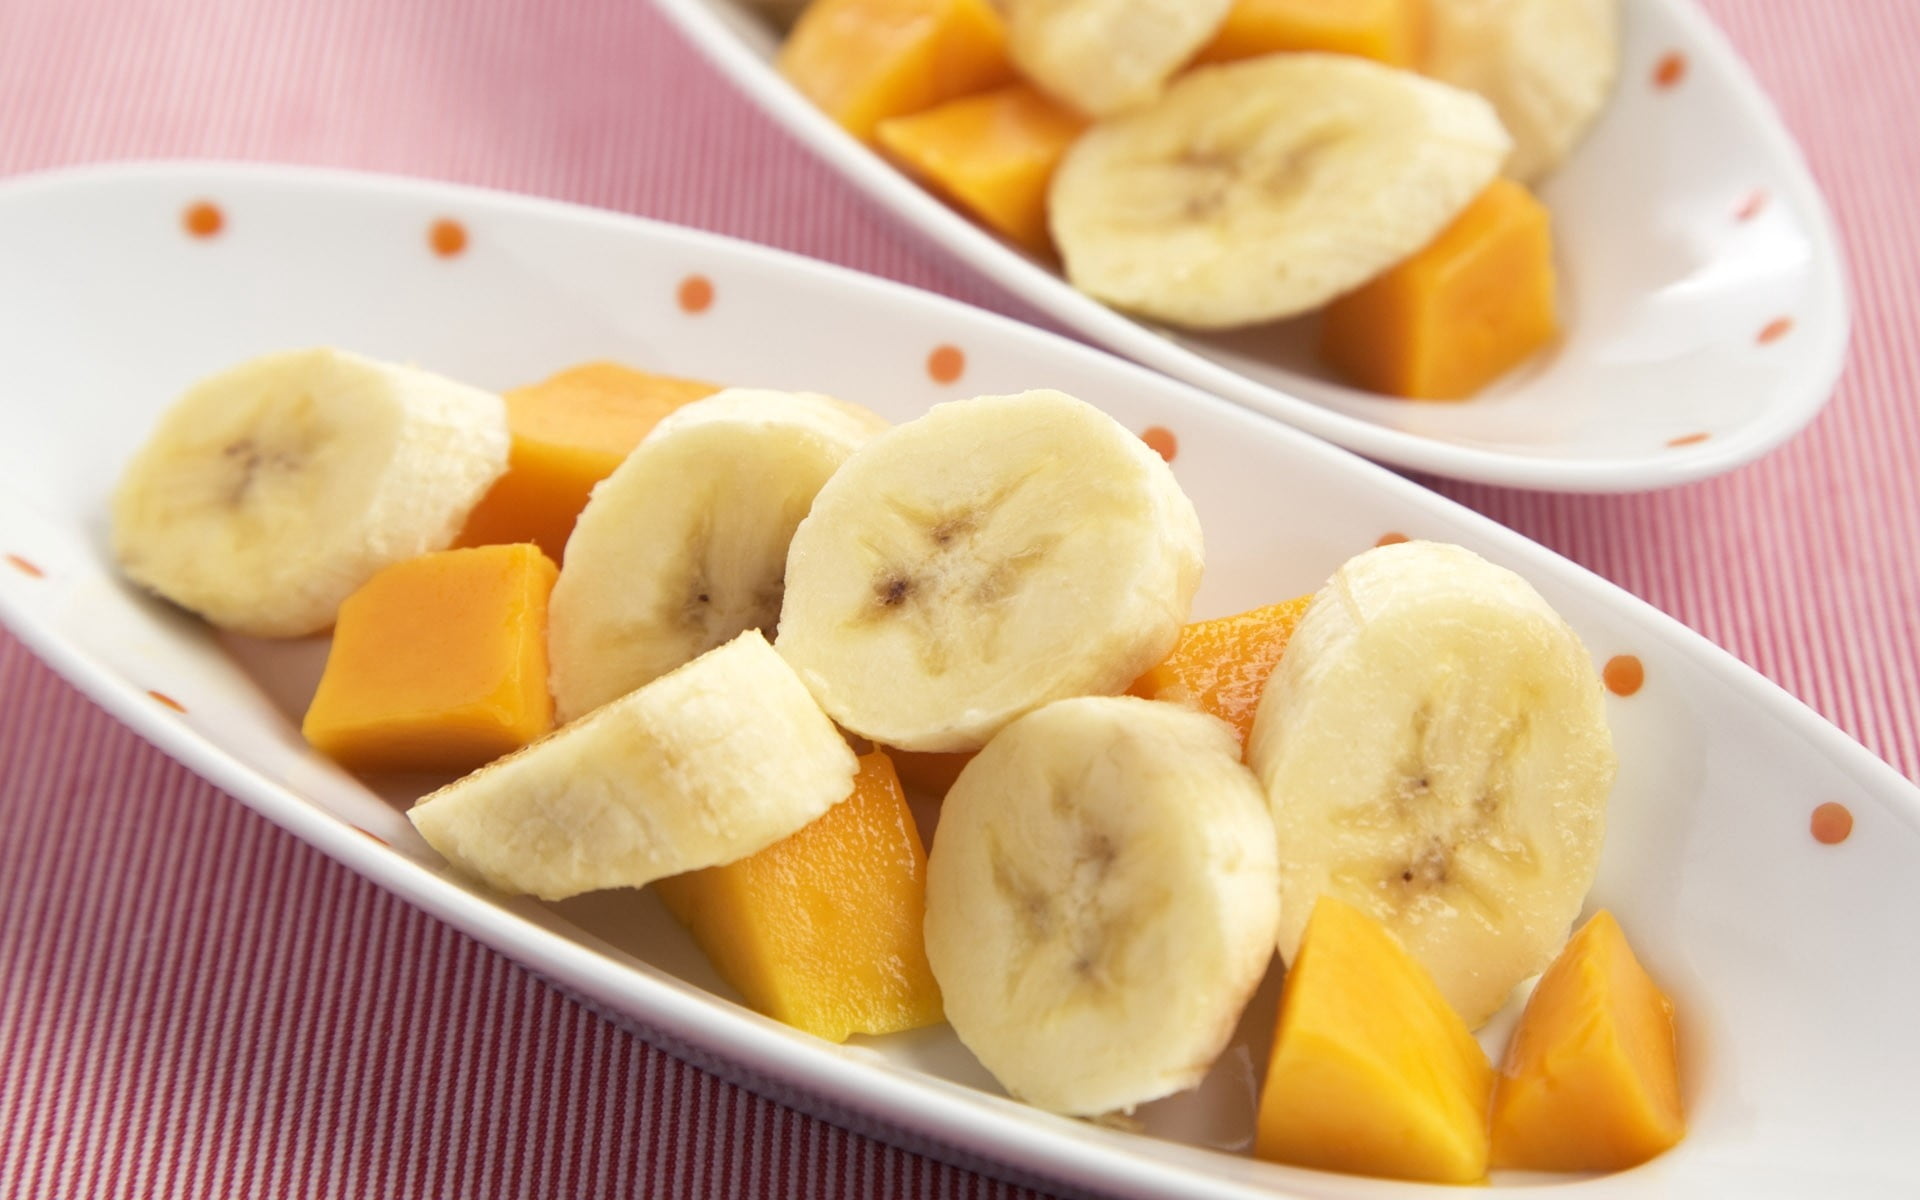 banana fruit, bananas, sliced, plate, food, yellow, close-up